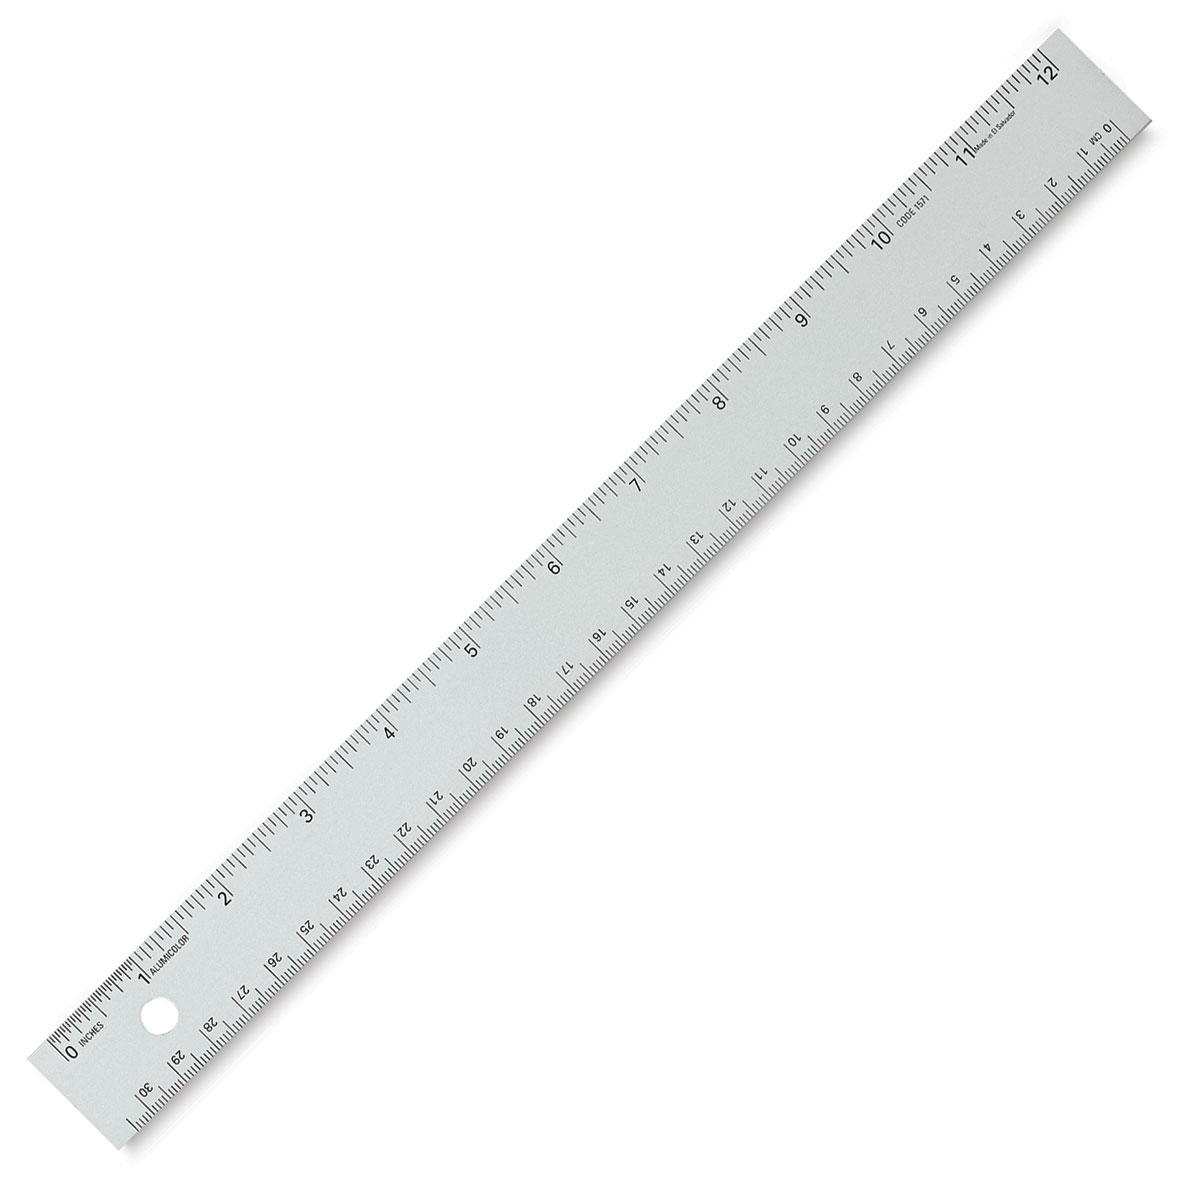 Ludwig Precision Non-Slip Backed Aluminum Straight Edge Ruler, 12-Inch, Silver